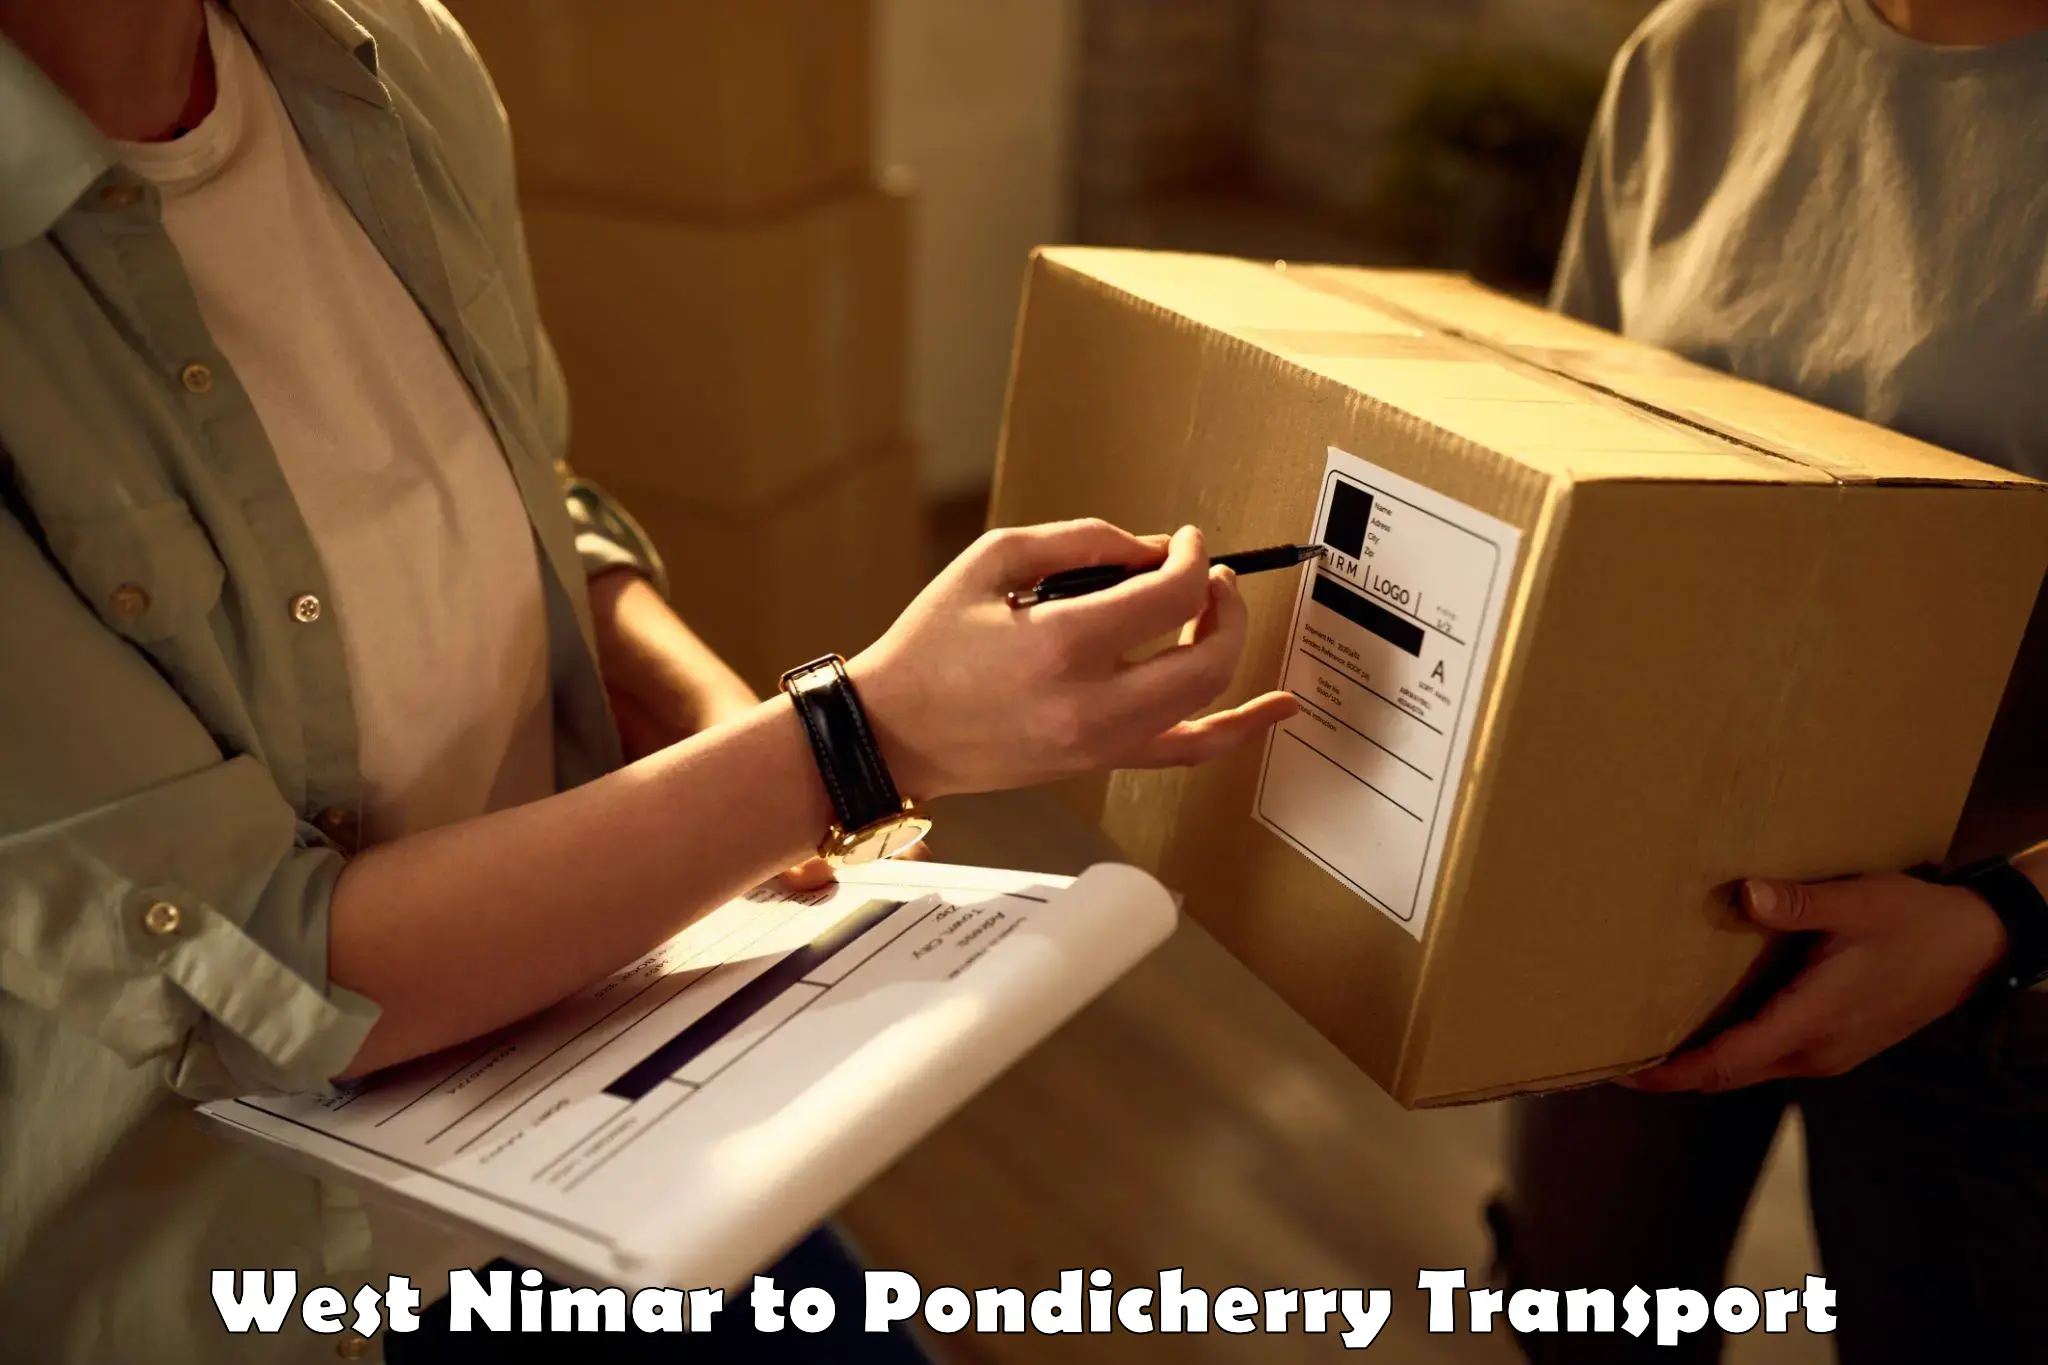 Commercial transport service West Nimar to Pondicherry